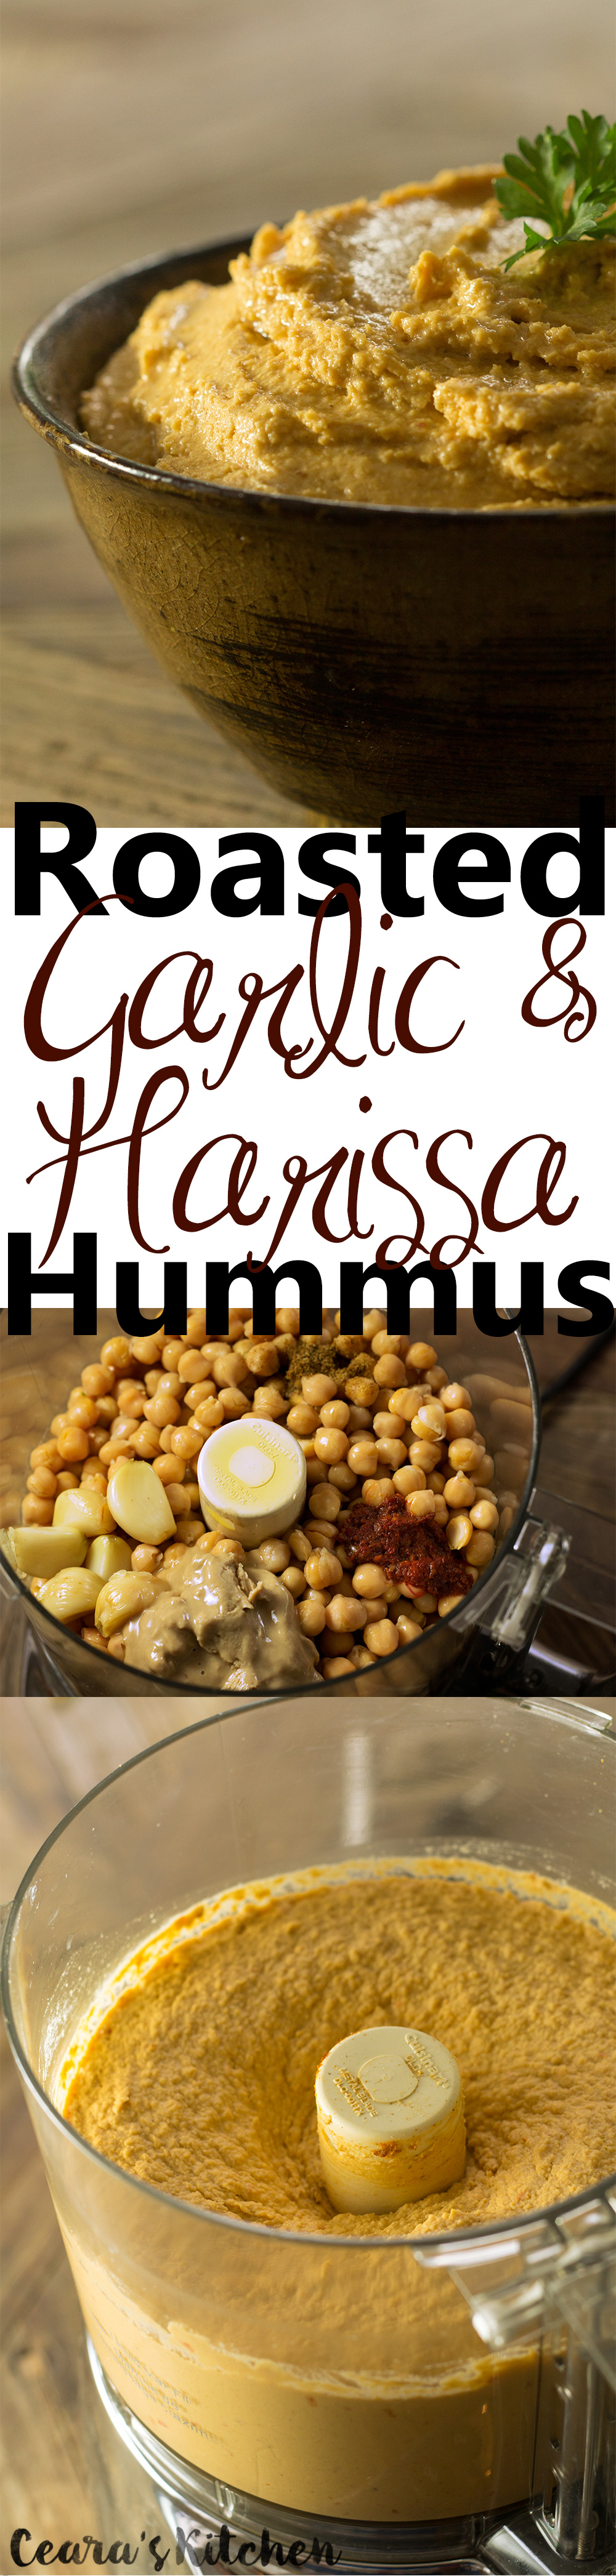  Harissa Hummus